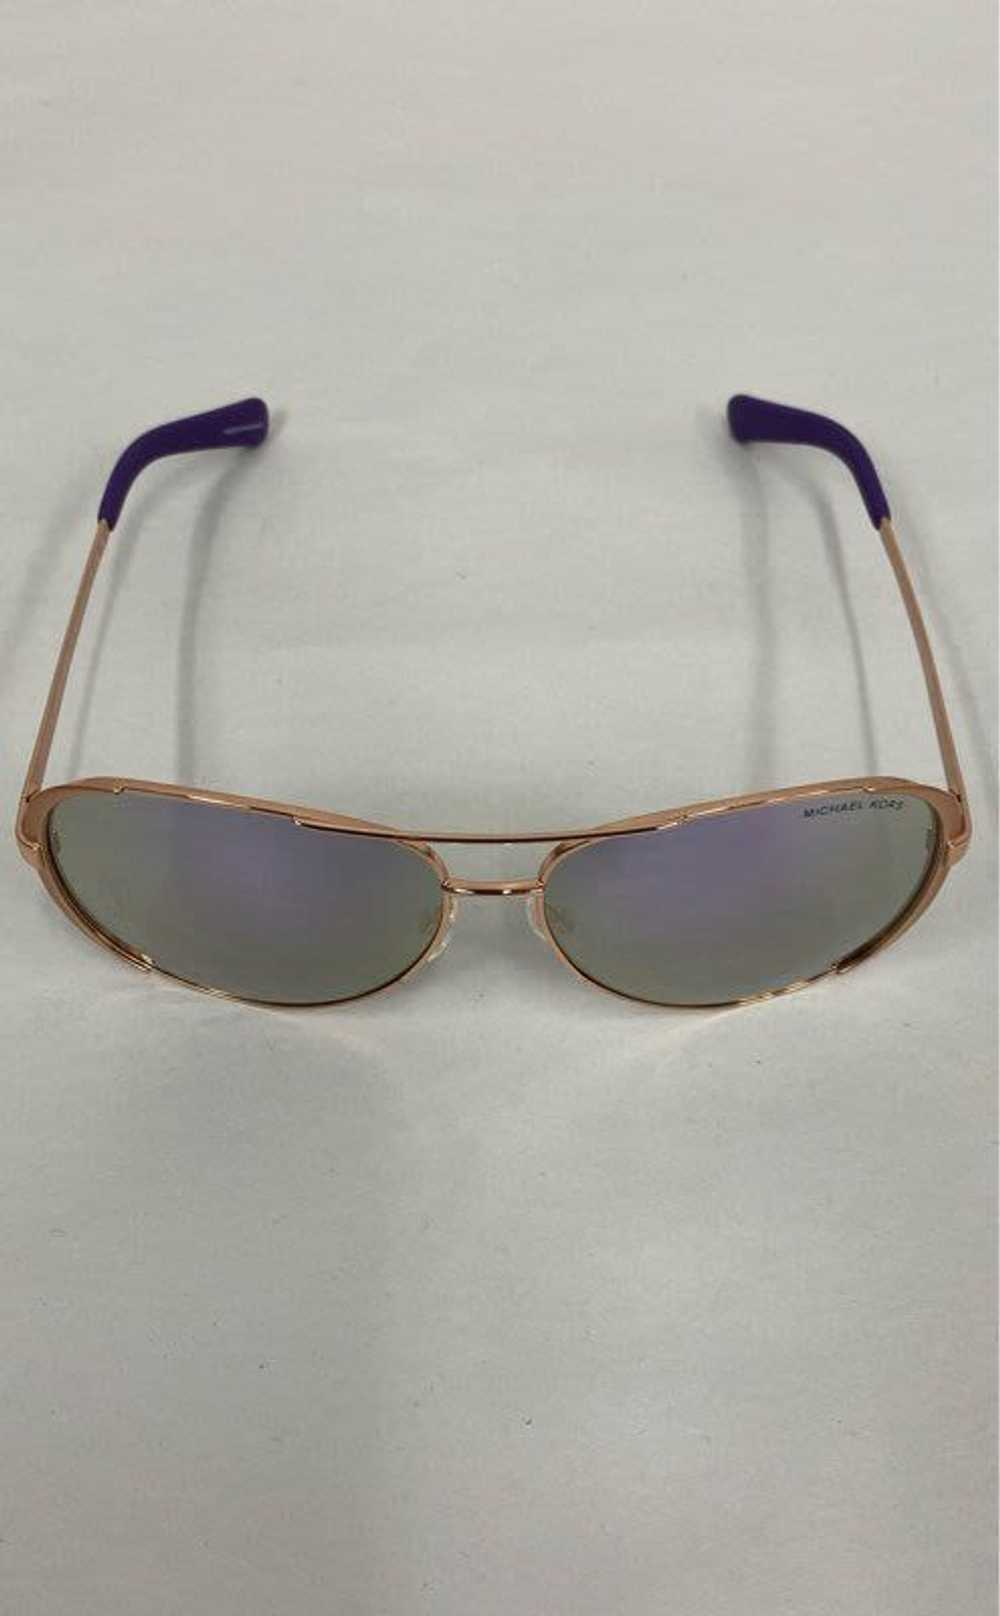 Michael Kors Purple Sunglasses - Size One Size - image 2